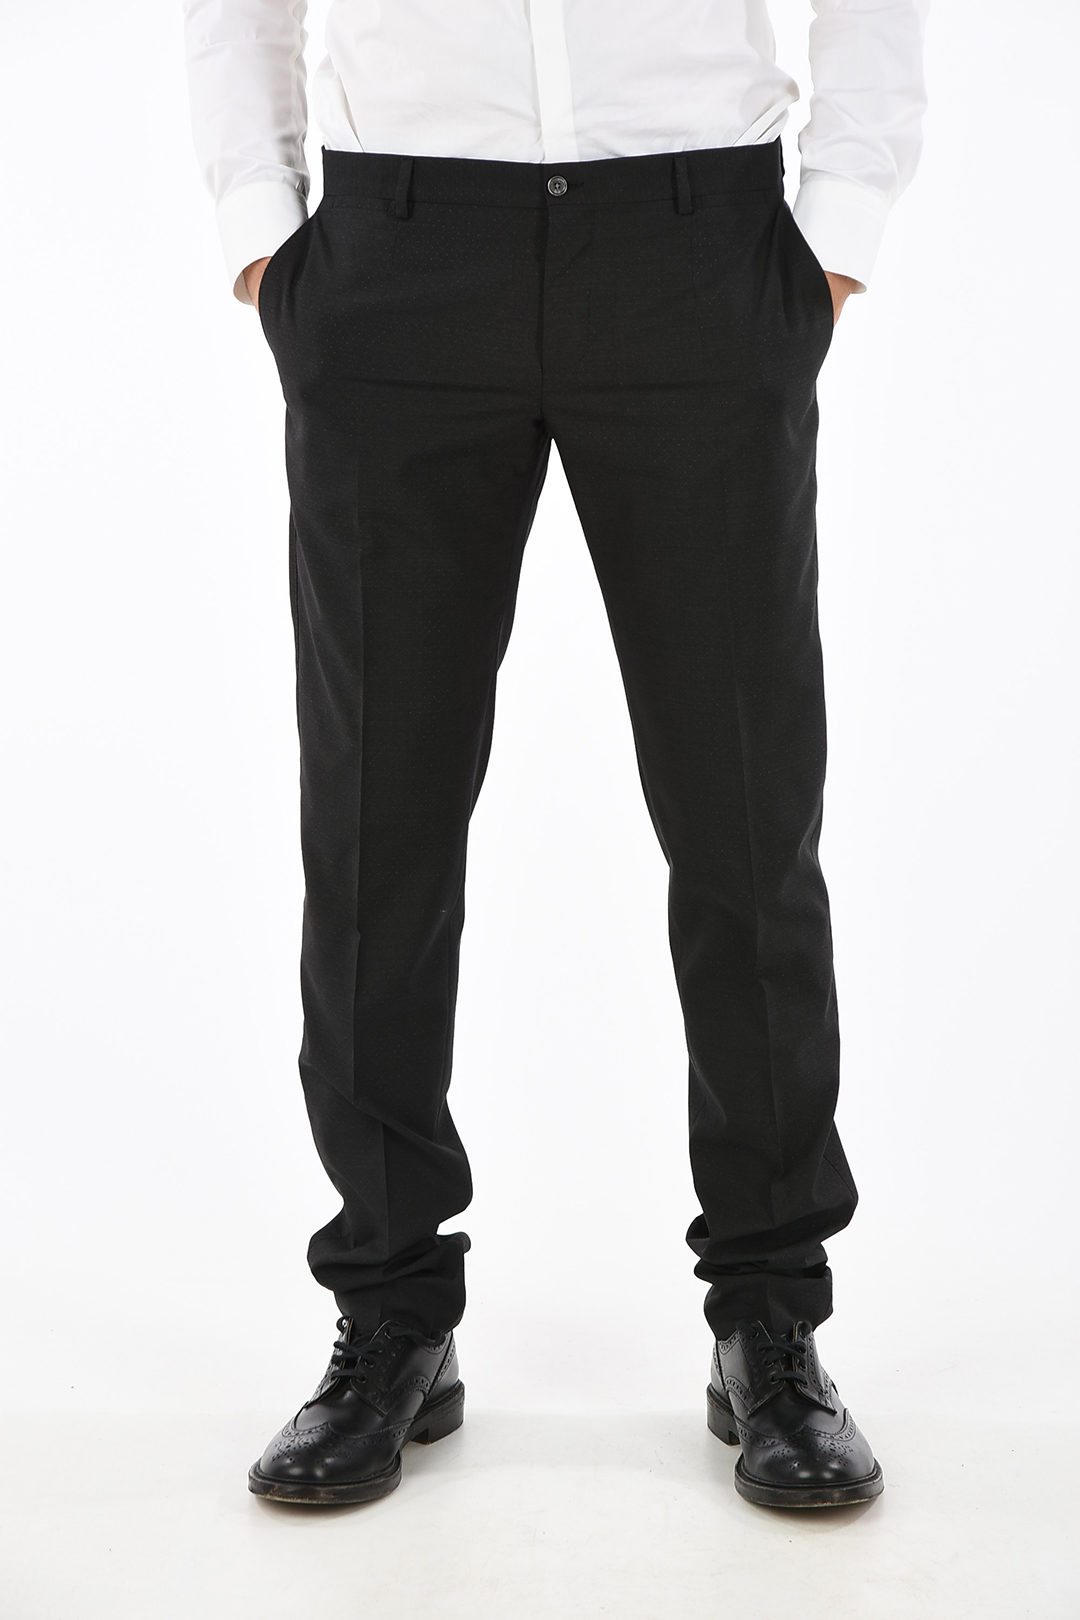 IT52 NEW $400 DOLCE /& GABBANA Pants Black Striped Wool Stretch Trouser s W38